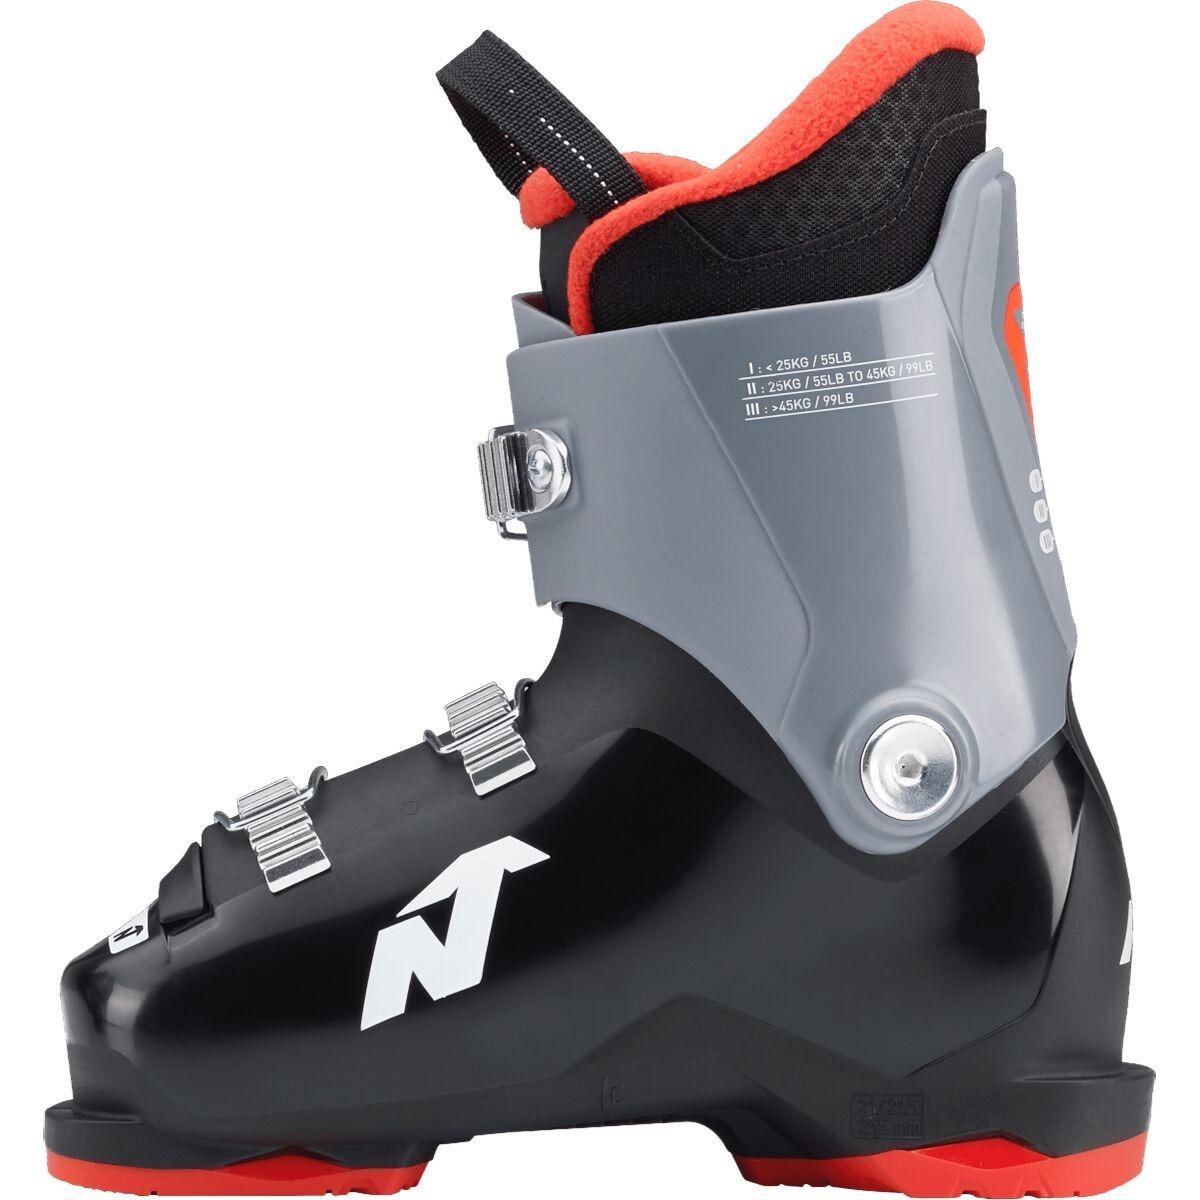 Nordica Speedmachine J3 Ski Boot - Boys'